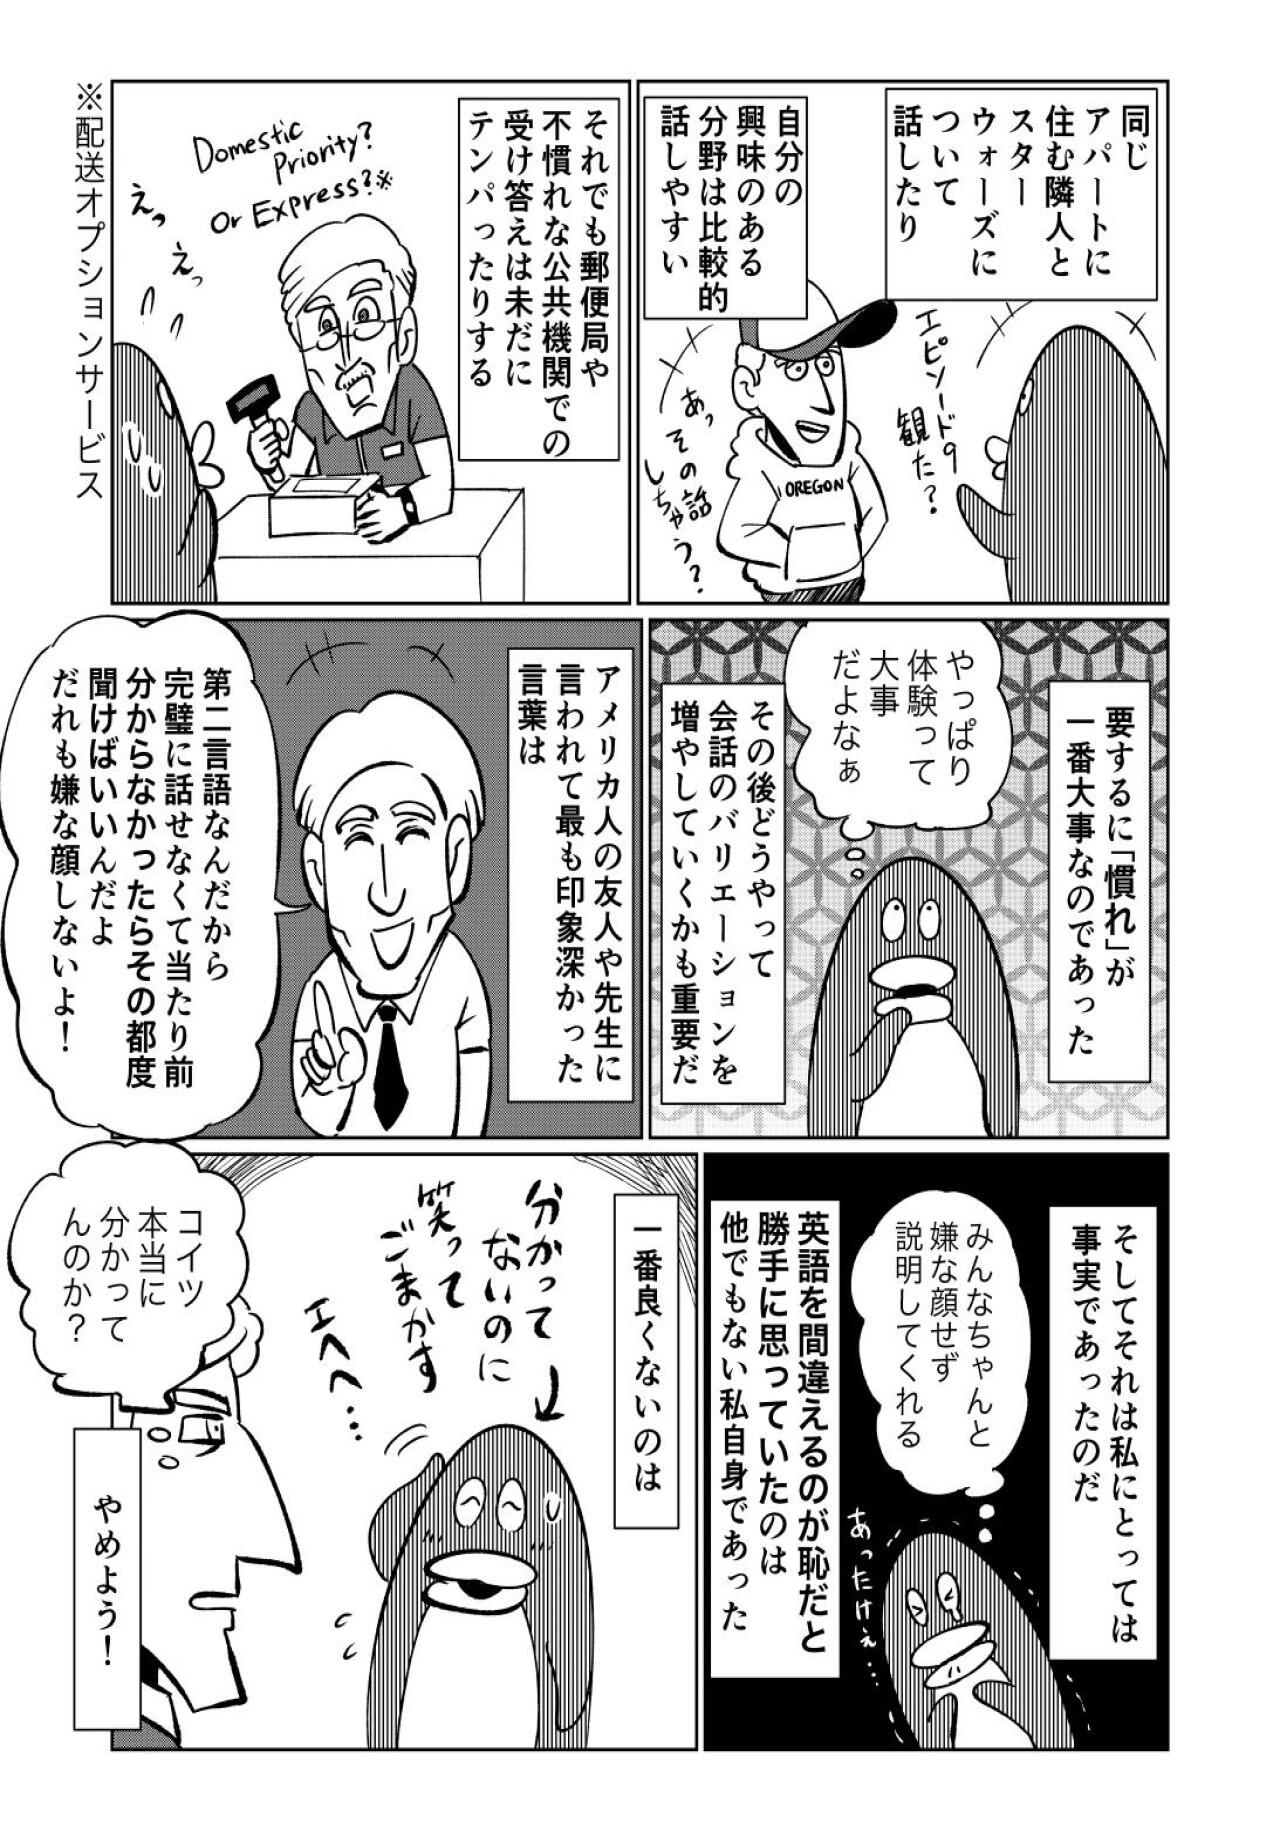 https://www.ryugaku.co.jp/column/images/34sai15_2_1280.jpg